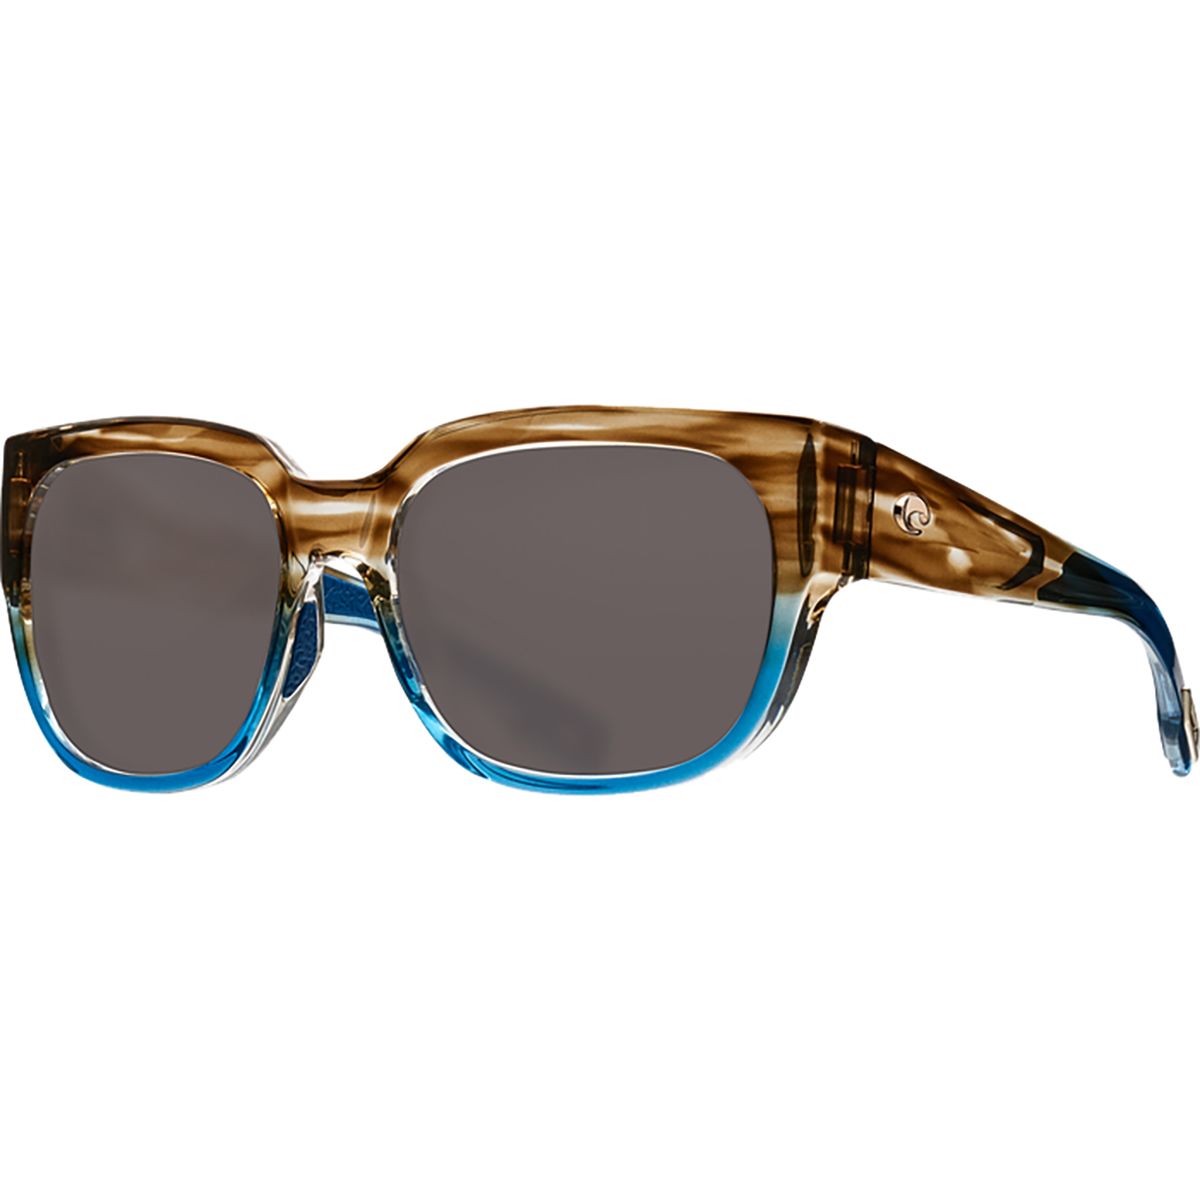 Costa Waterwoman 580G Polarized Sunglasses - Women's